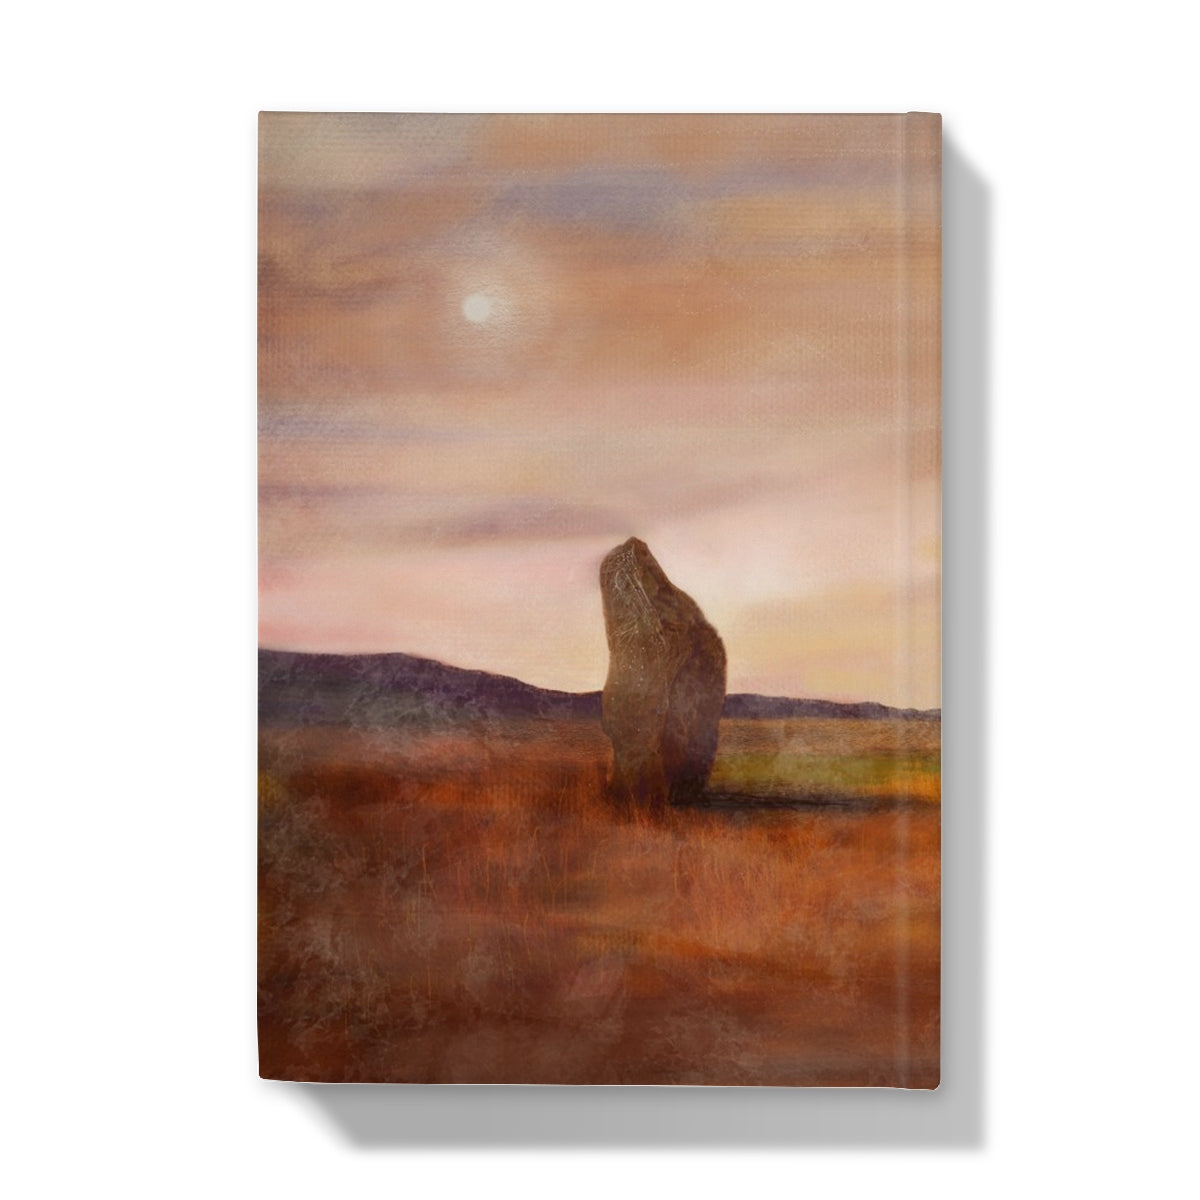 Machrie Moor Arran Art Gifts Hardback Journal-Journals & Notebooks-Arran Art Gallery-Paintings, Prints, Homeware, Art Gifts From Scotland By Scottish Artist Kevin Hunter